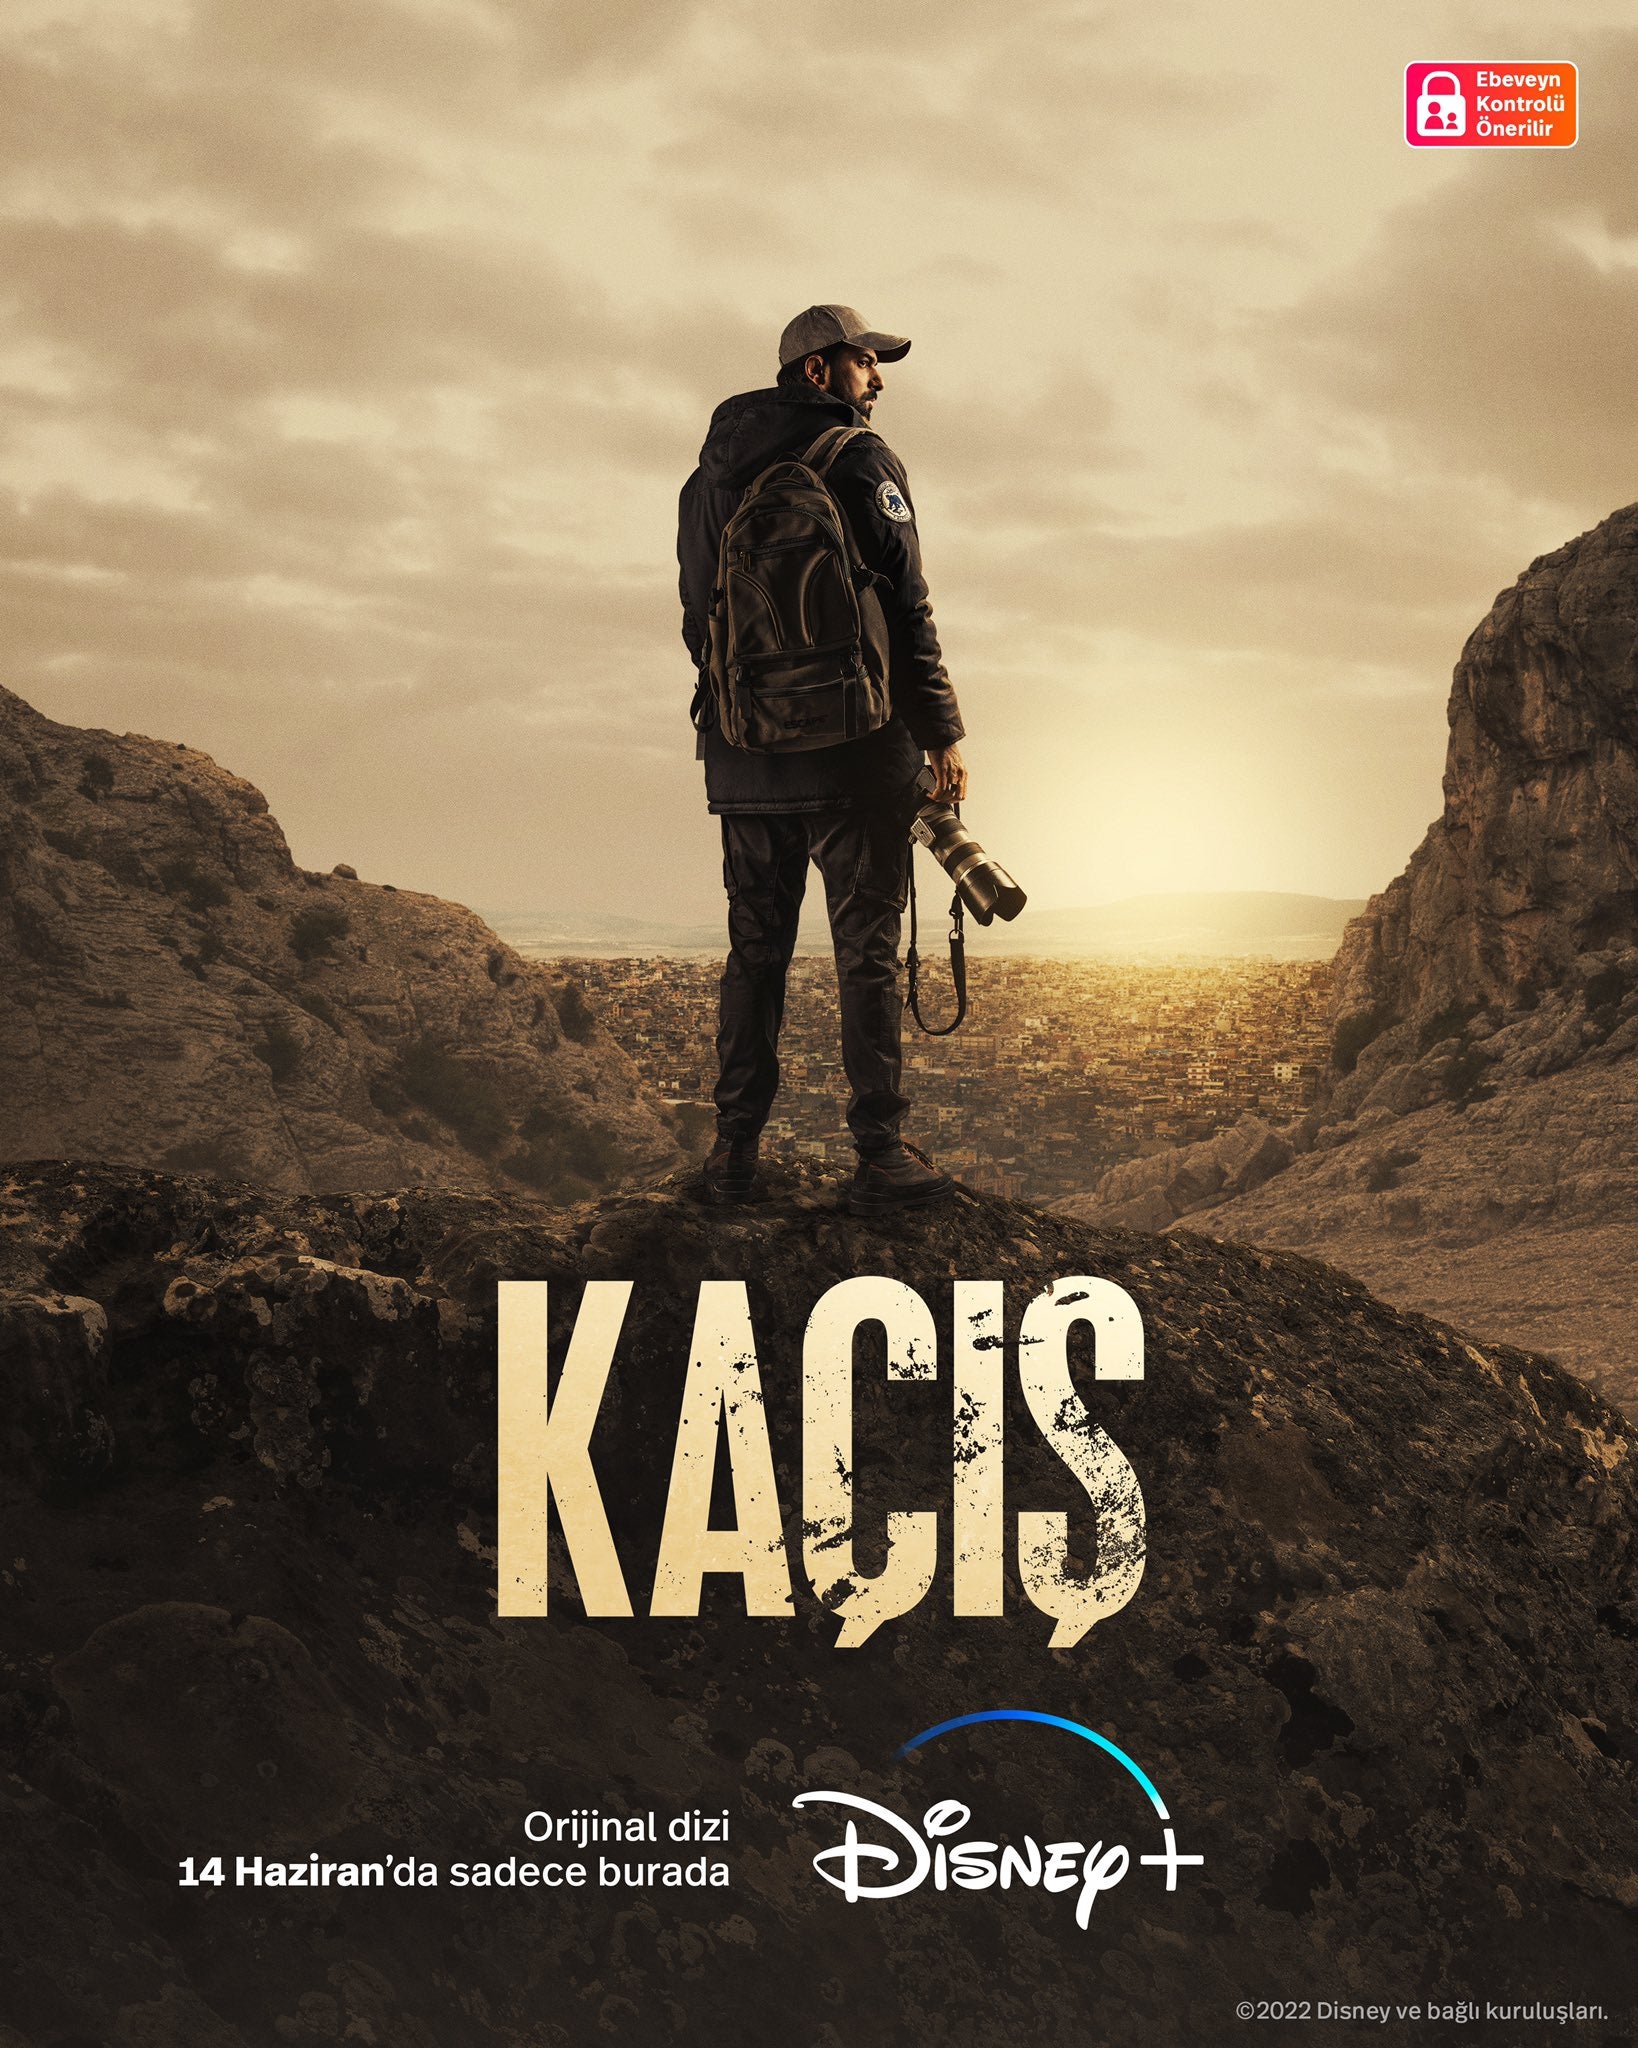 TV ratings for Escape (Kaçış 2022) in the United Kingdom. Disney+ TV series